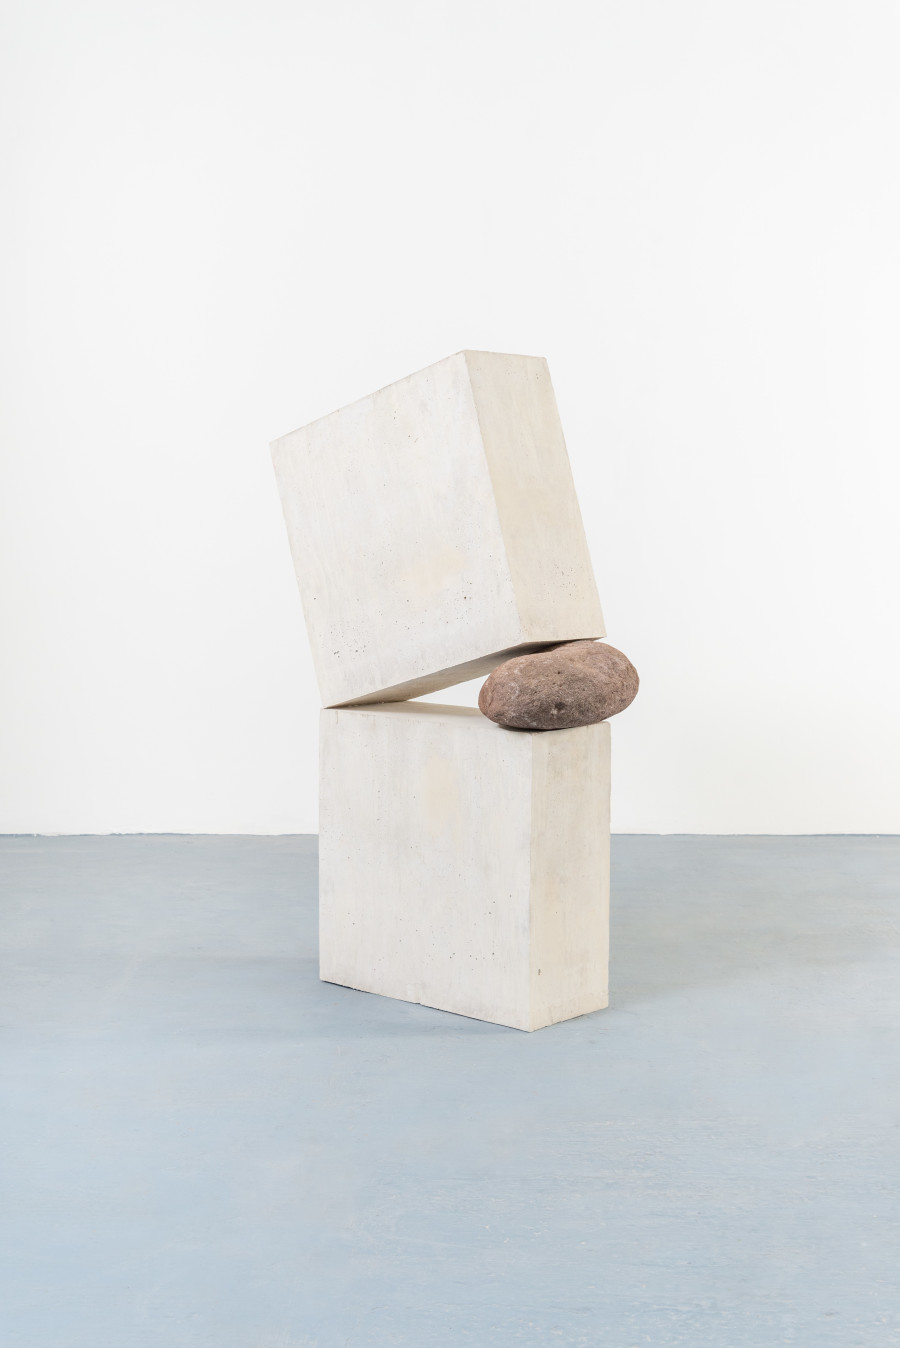 Jose Dávila, The exception that proves the rule, 2021, Concrete and boulder, 157 x 98 x 44 cm. Photo: Agustín Arce